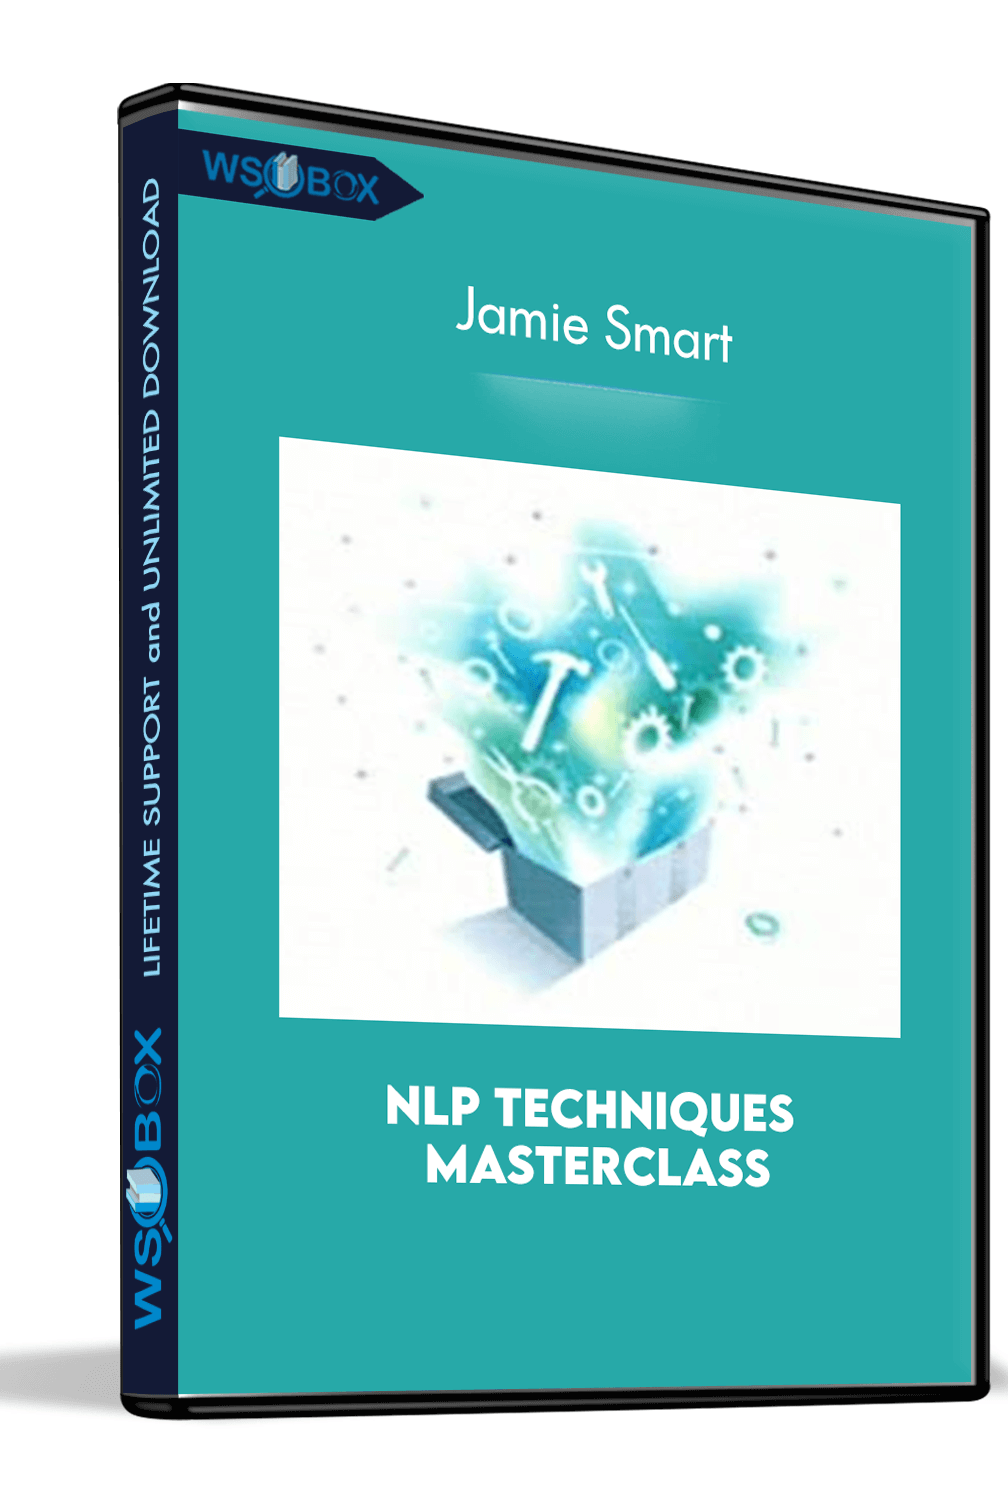 nlp-techniques-masterclass-jamie-smart